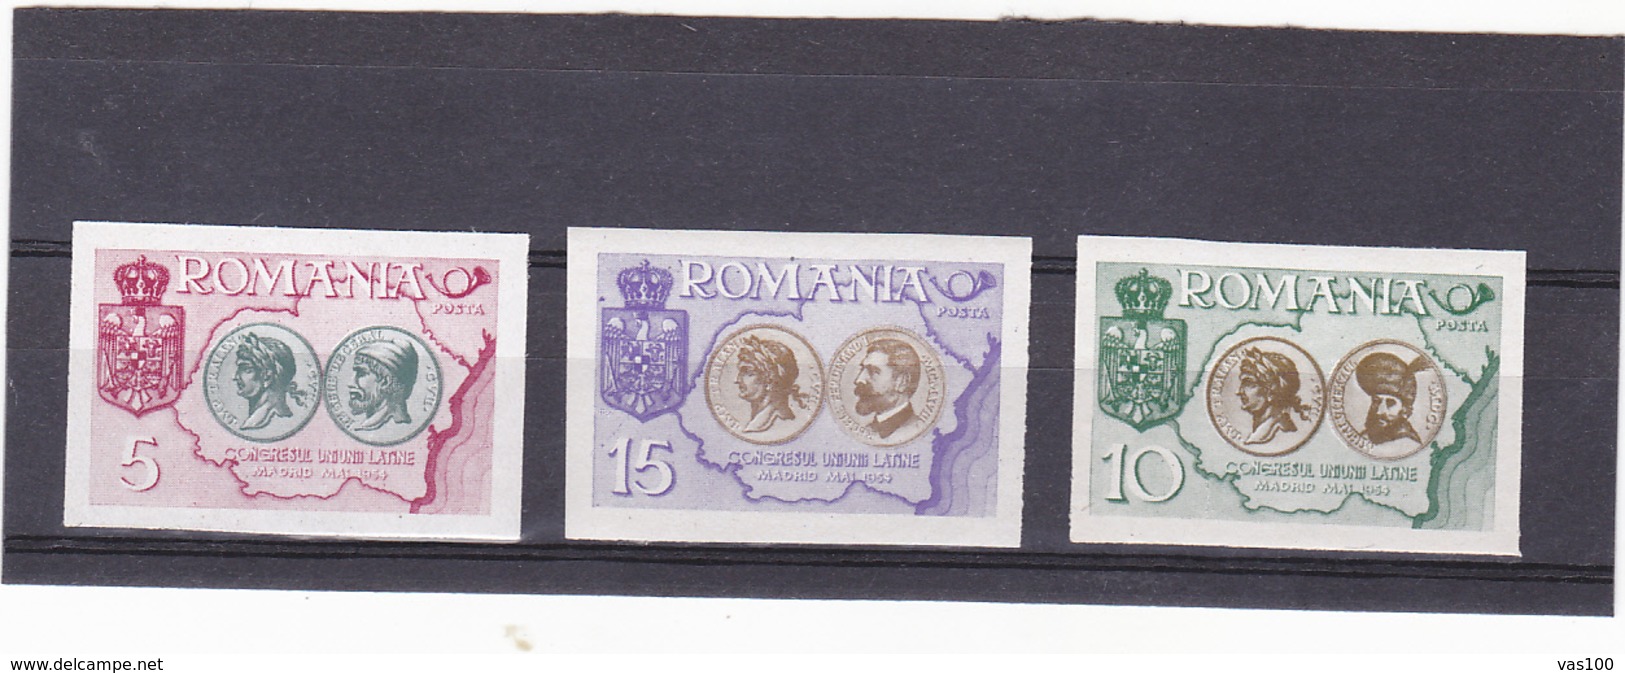 SPAIN - EXILE ,UNION OF TRANSYLVANIA WITH ROMANIA,FULL SET 1954,MNH,ROMANIA. - Local Post Stamps